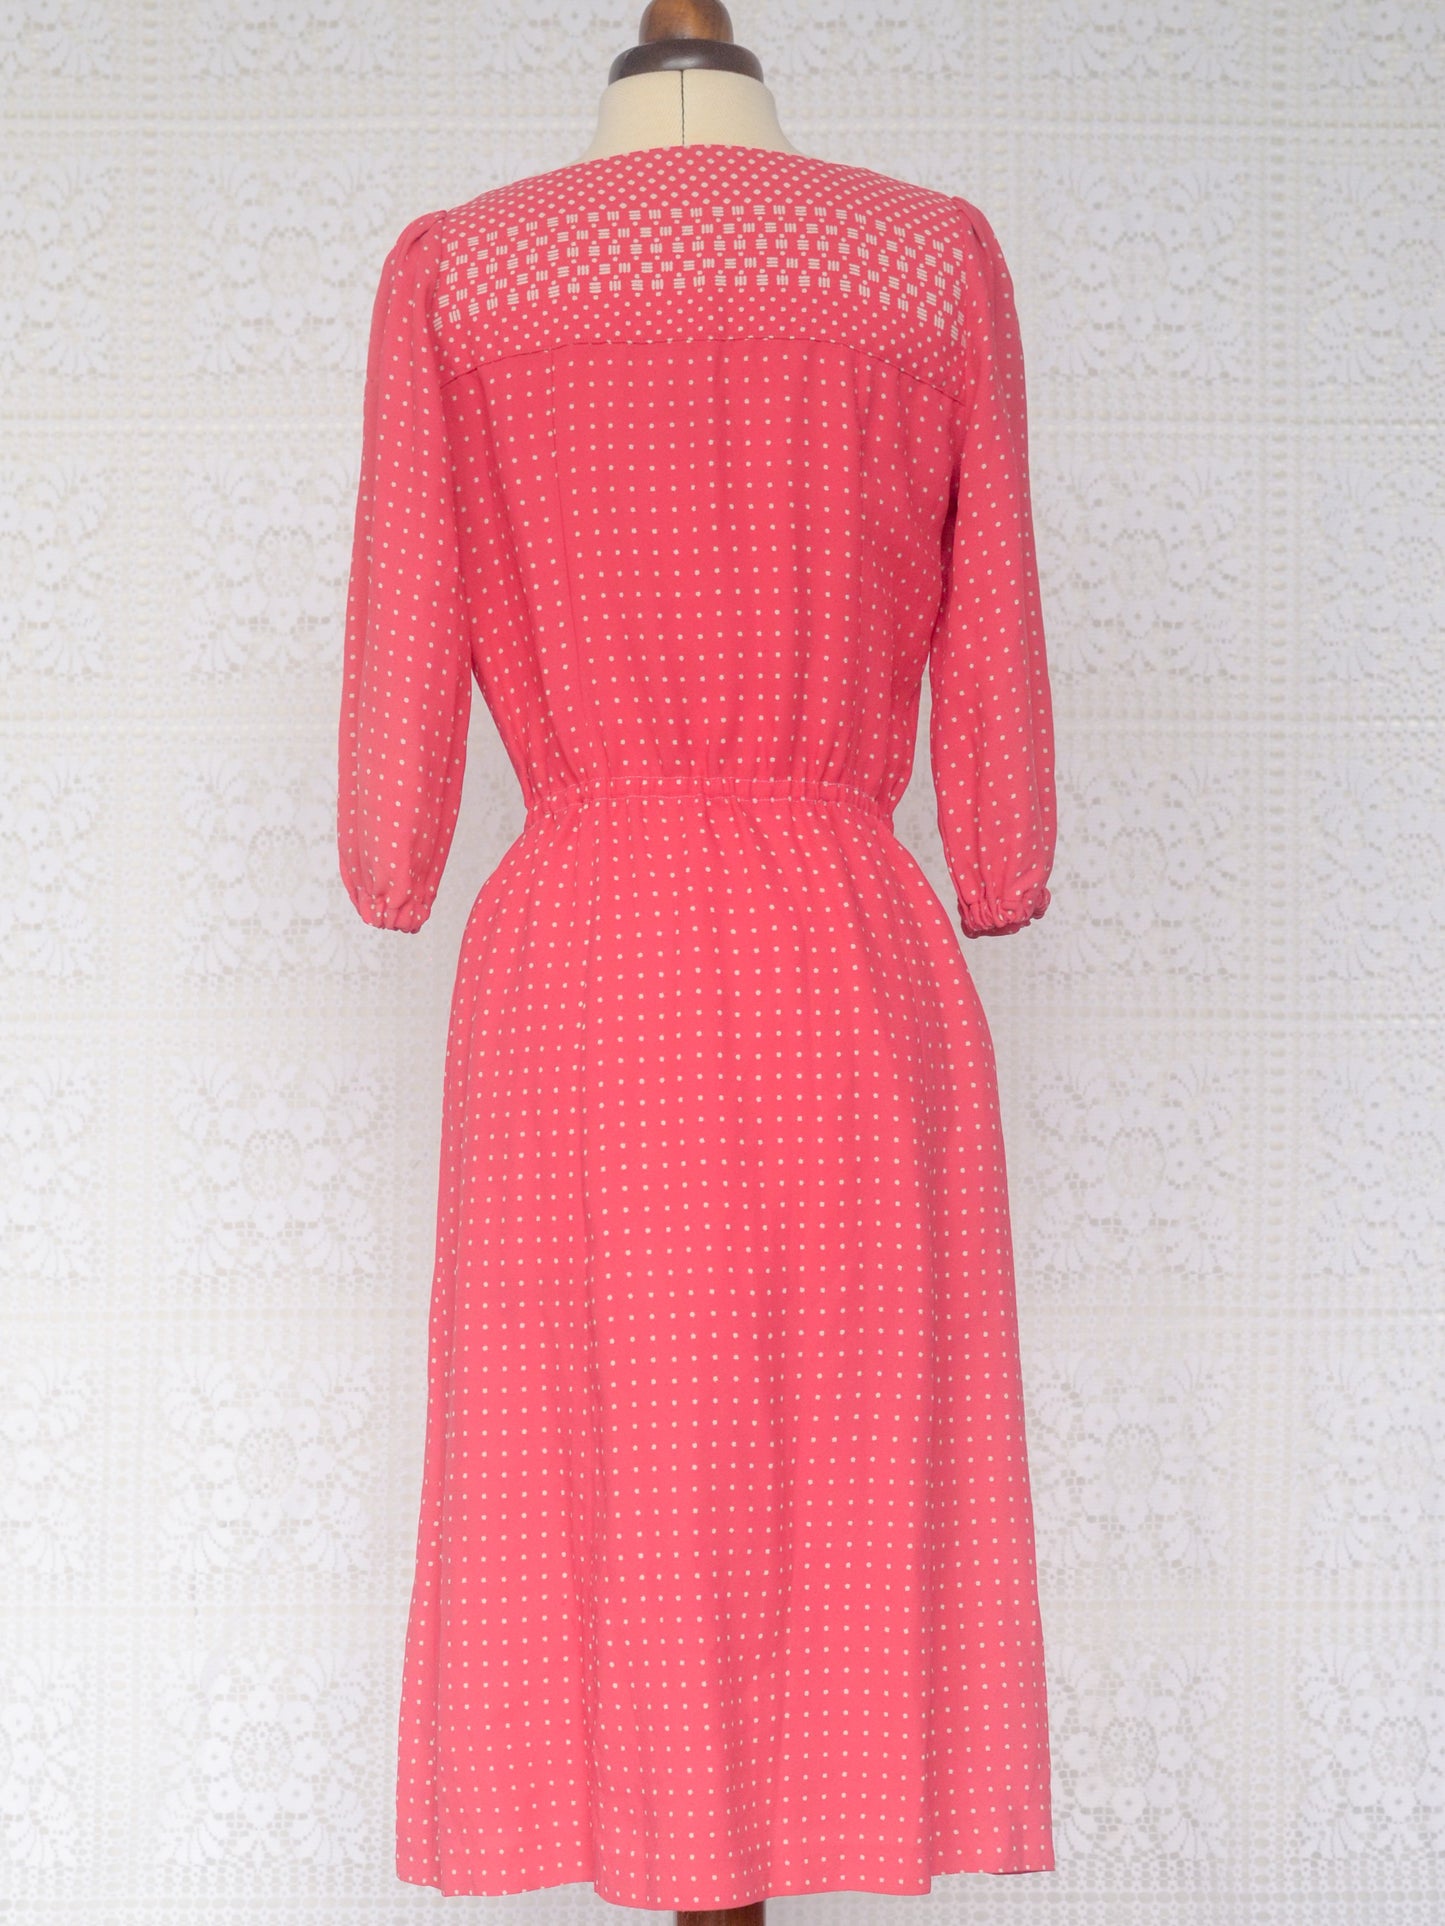 1970s pink French midi dress